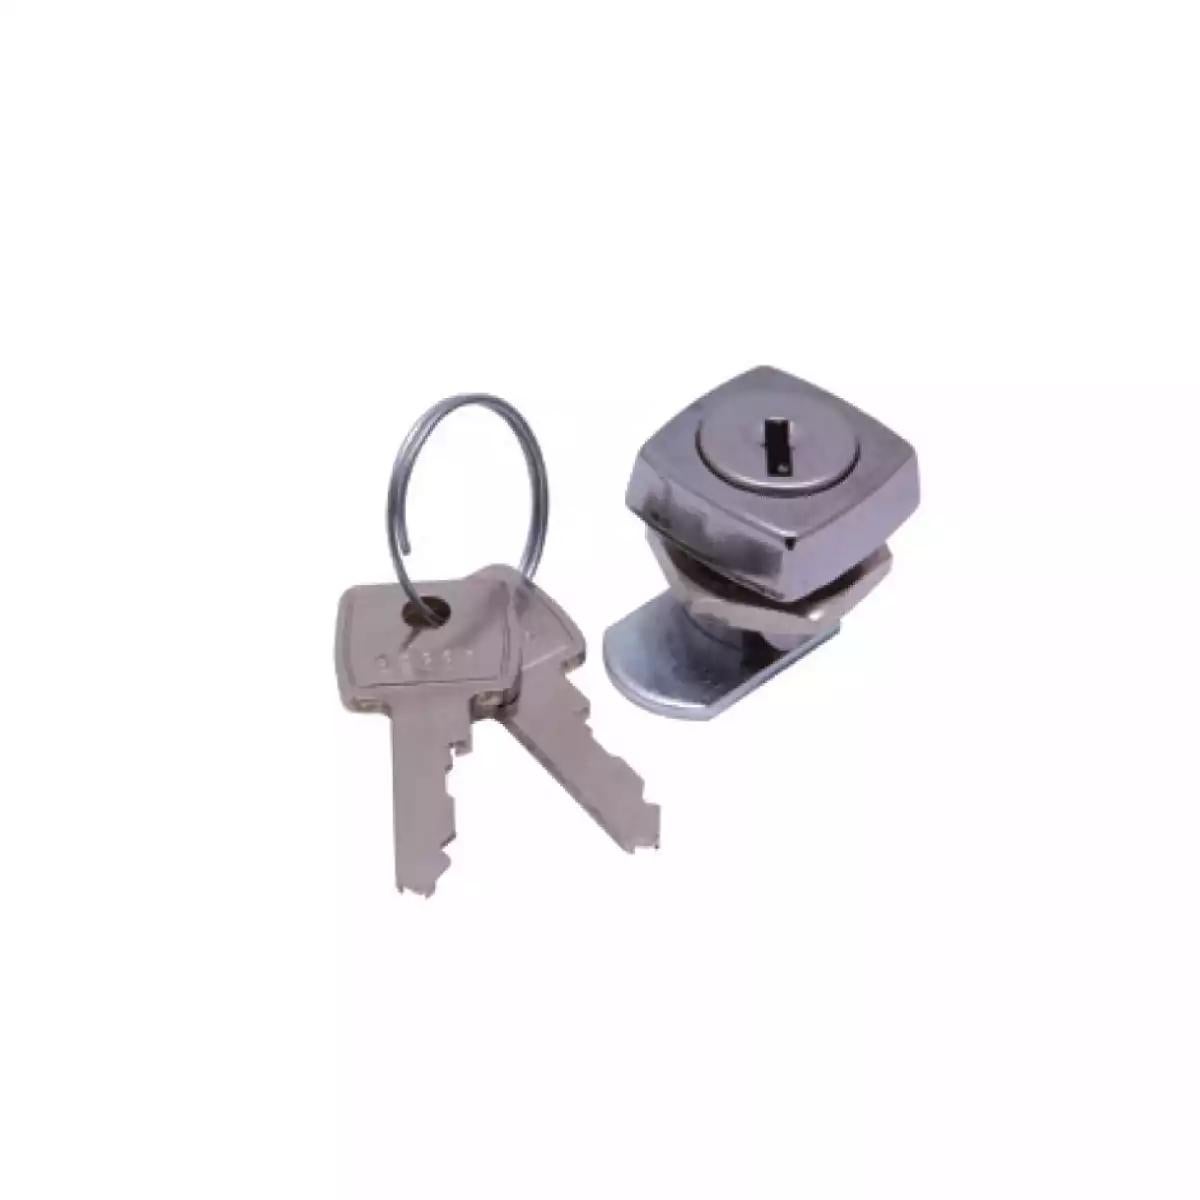 Square D Classic - Key lock